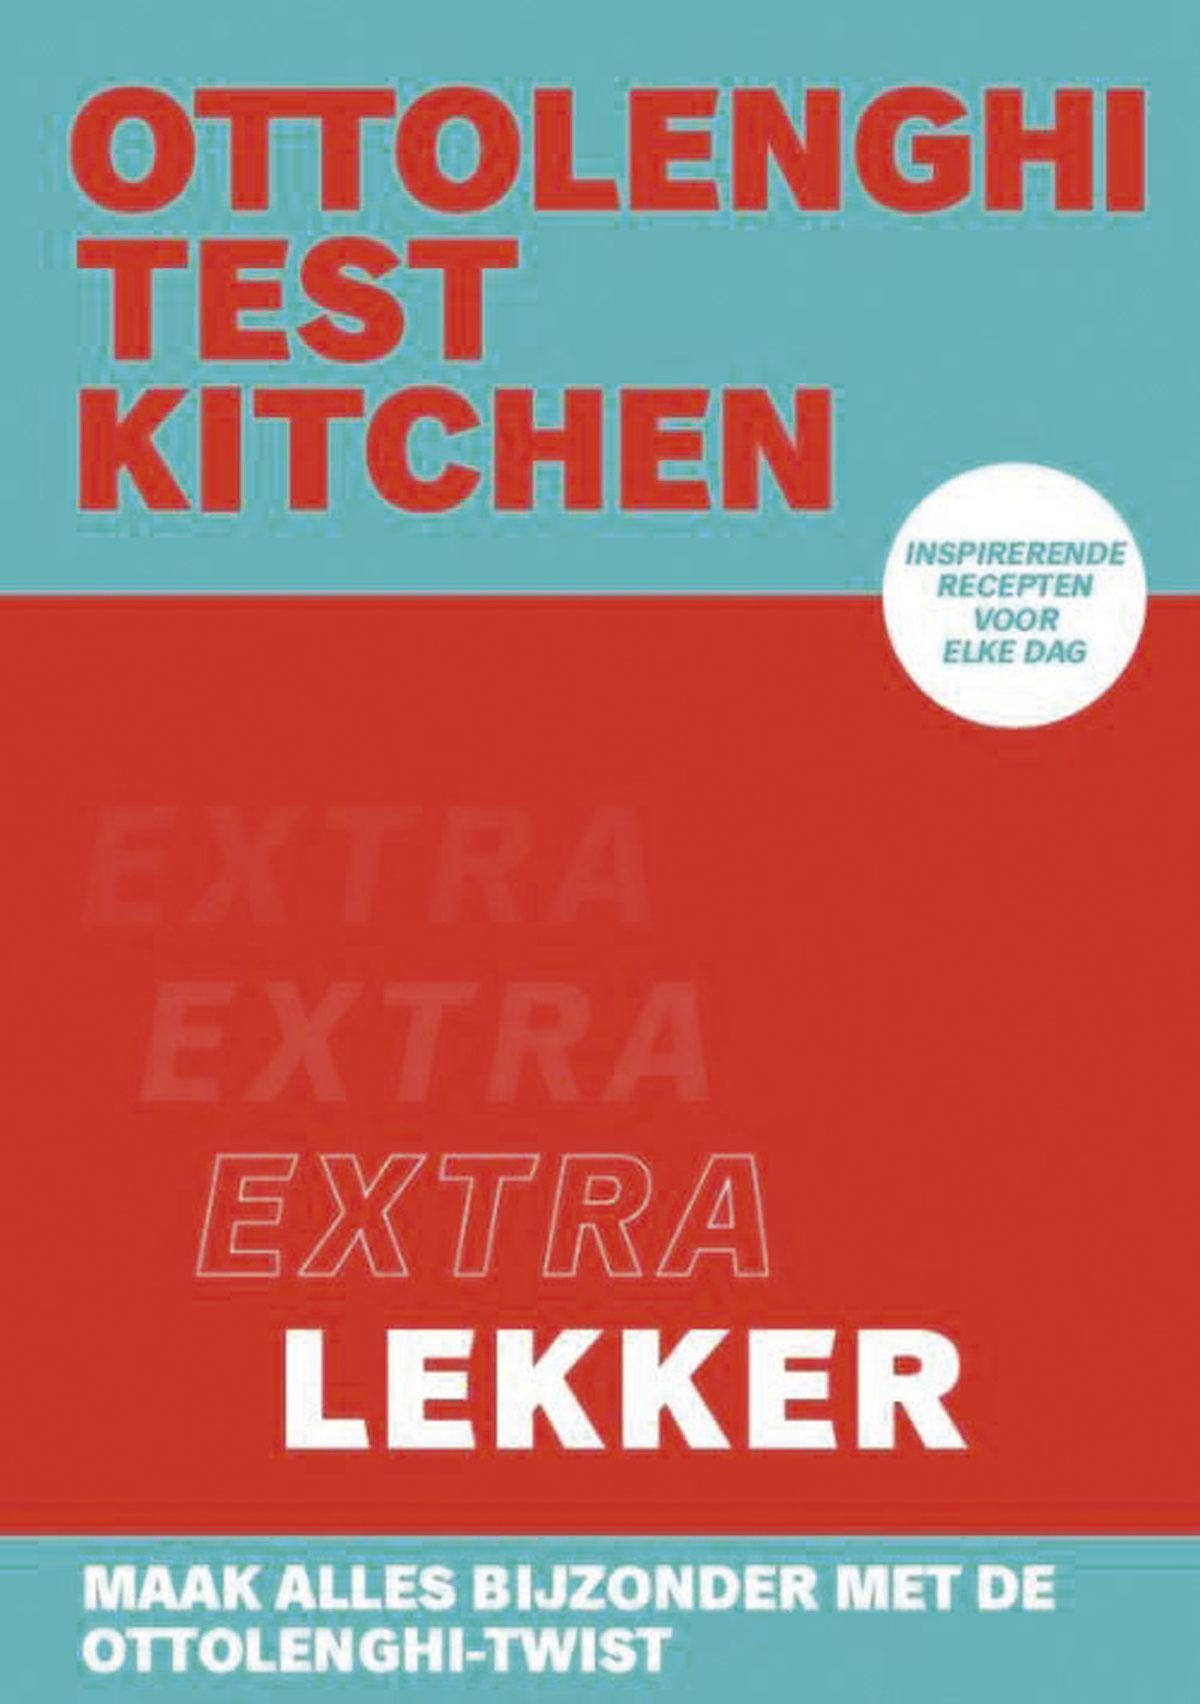 Ottolenghi Test Kitchen: Extra Lekker, uitgeverij Fontaine, 33,95 euro.